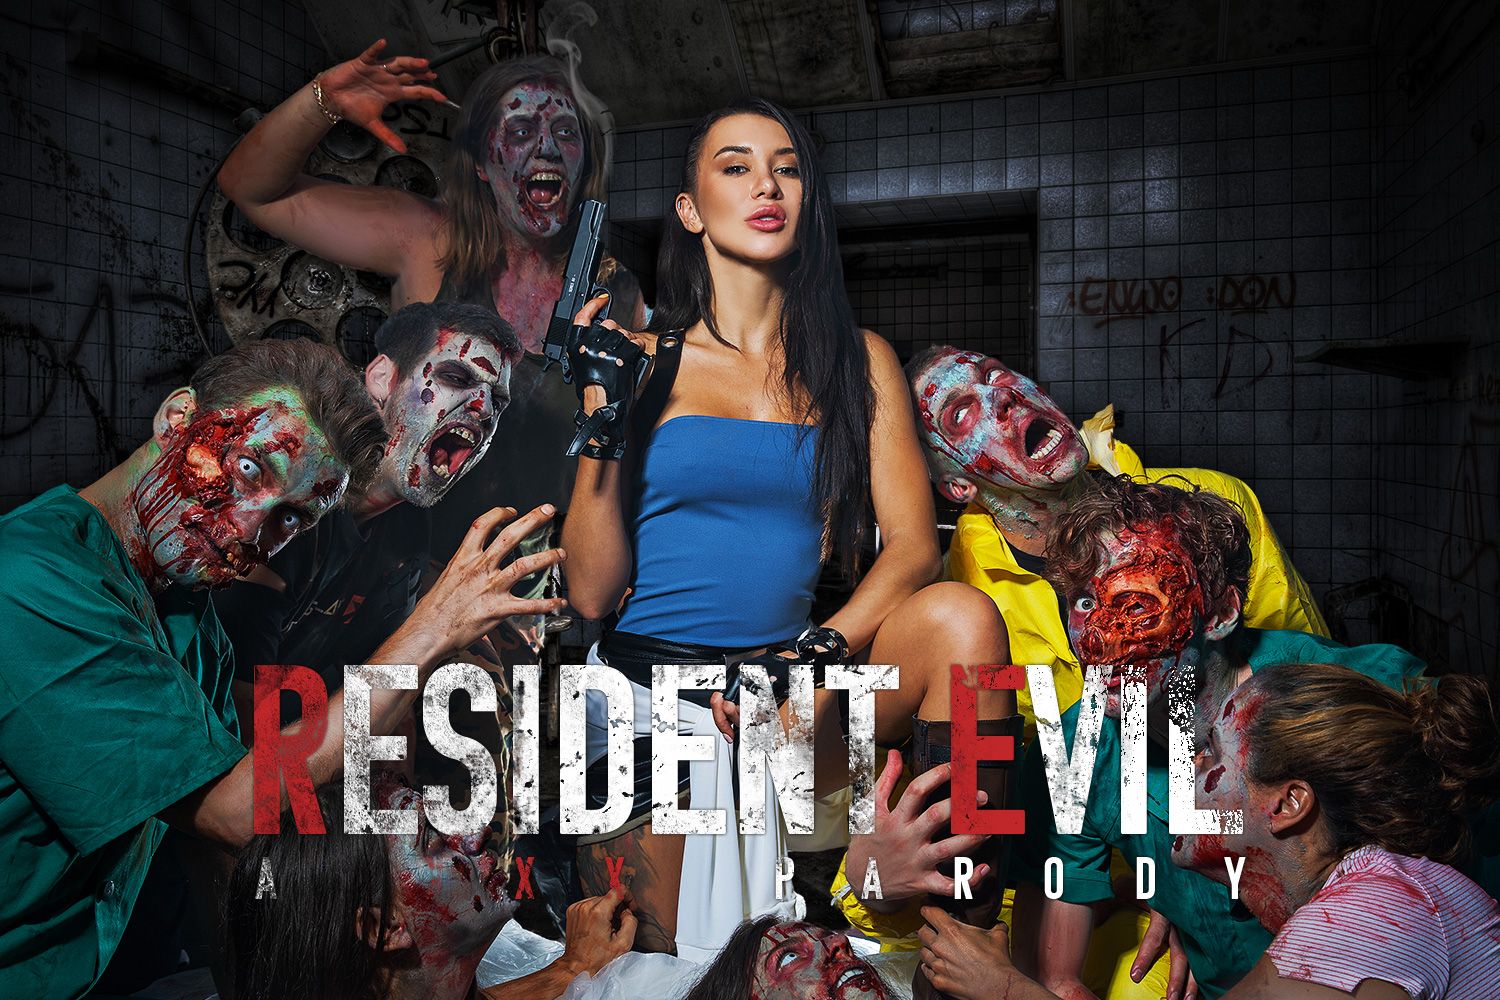 Resident evil 3 parody